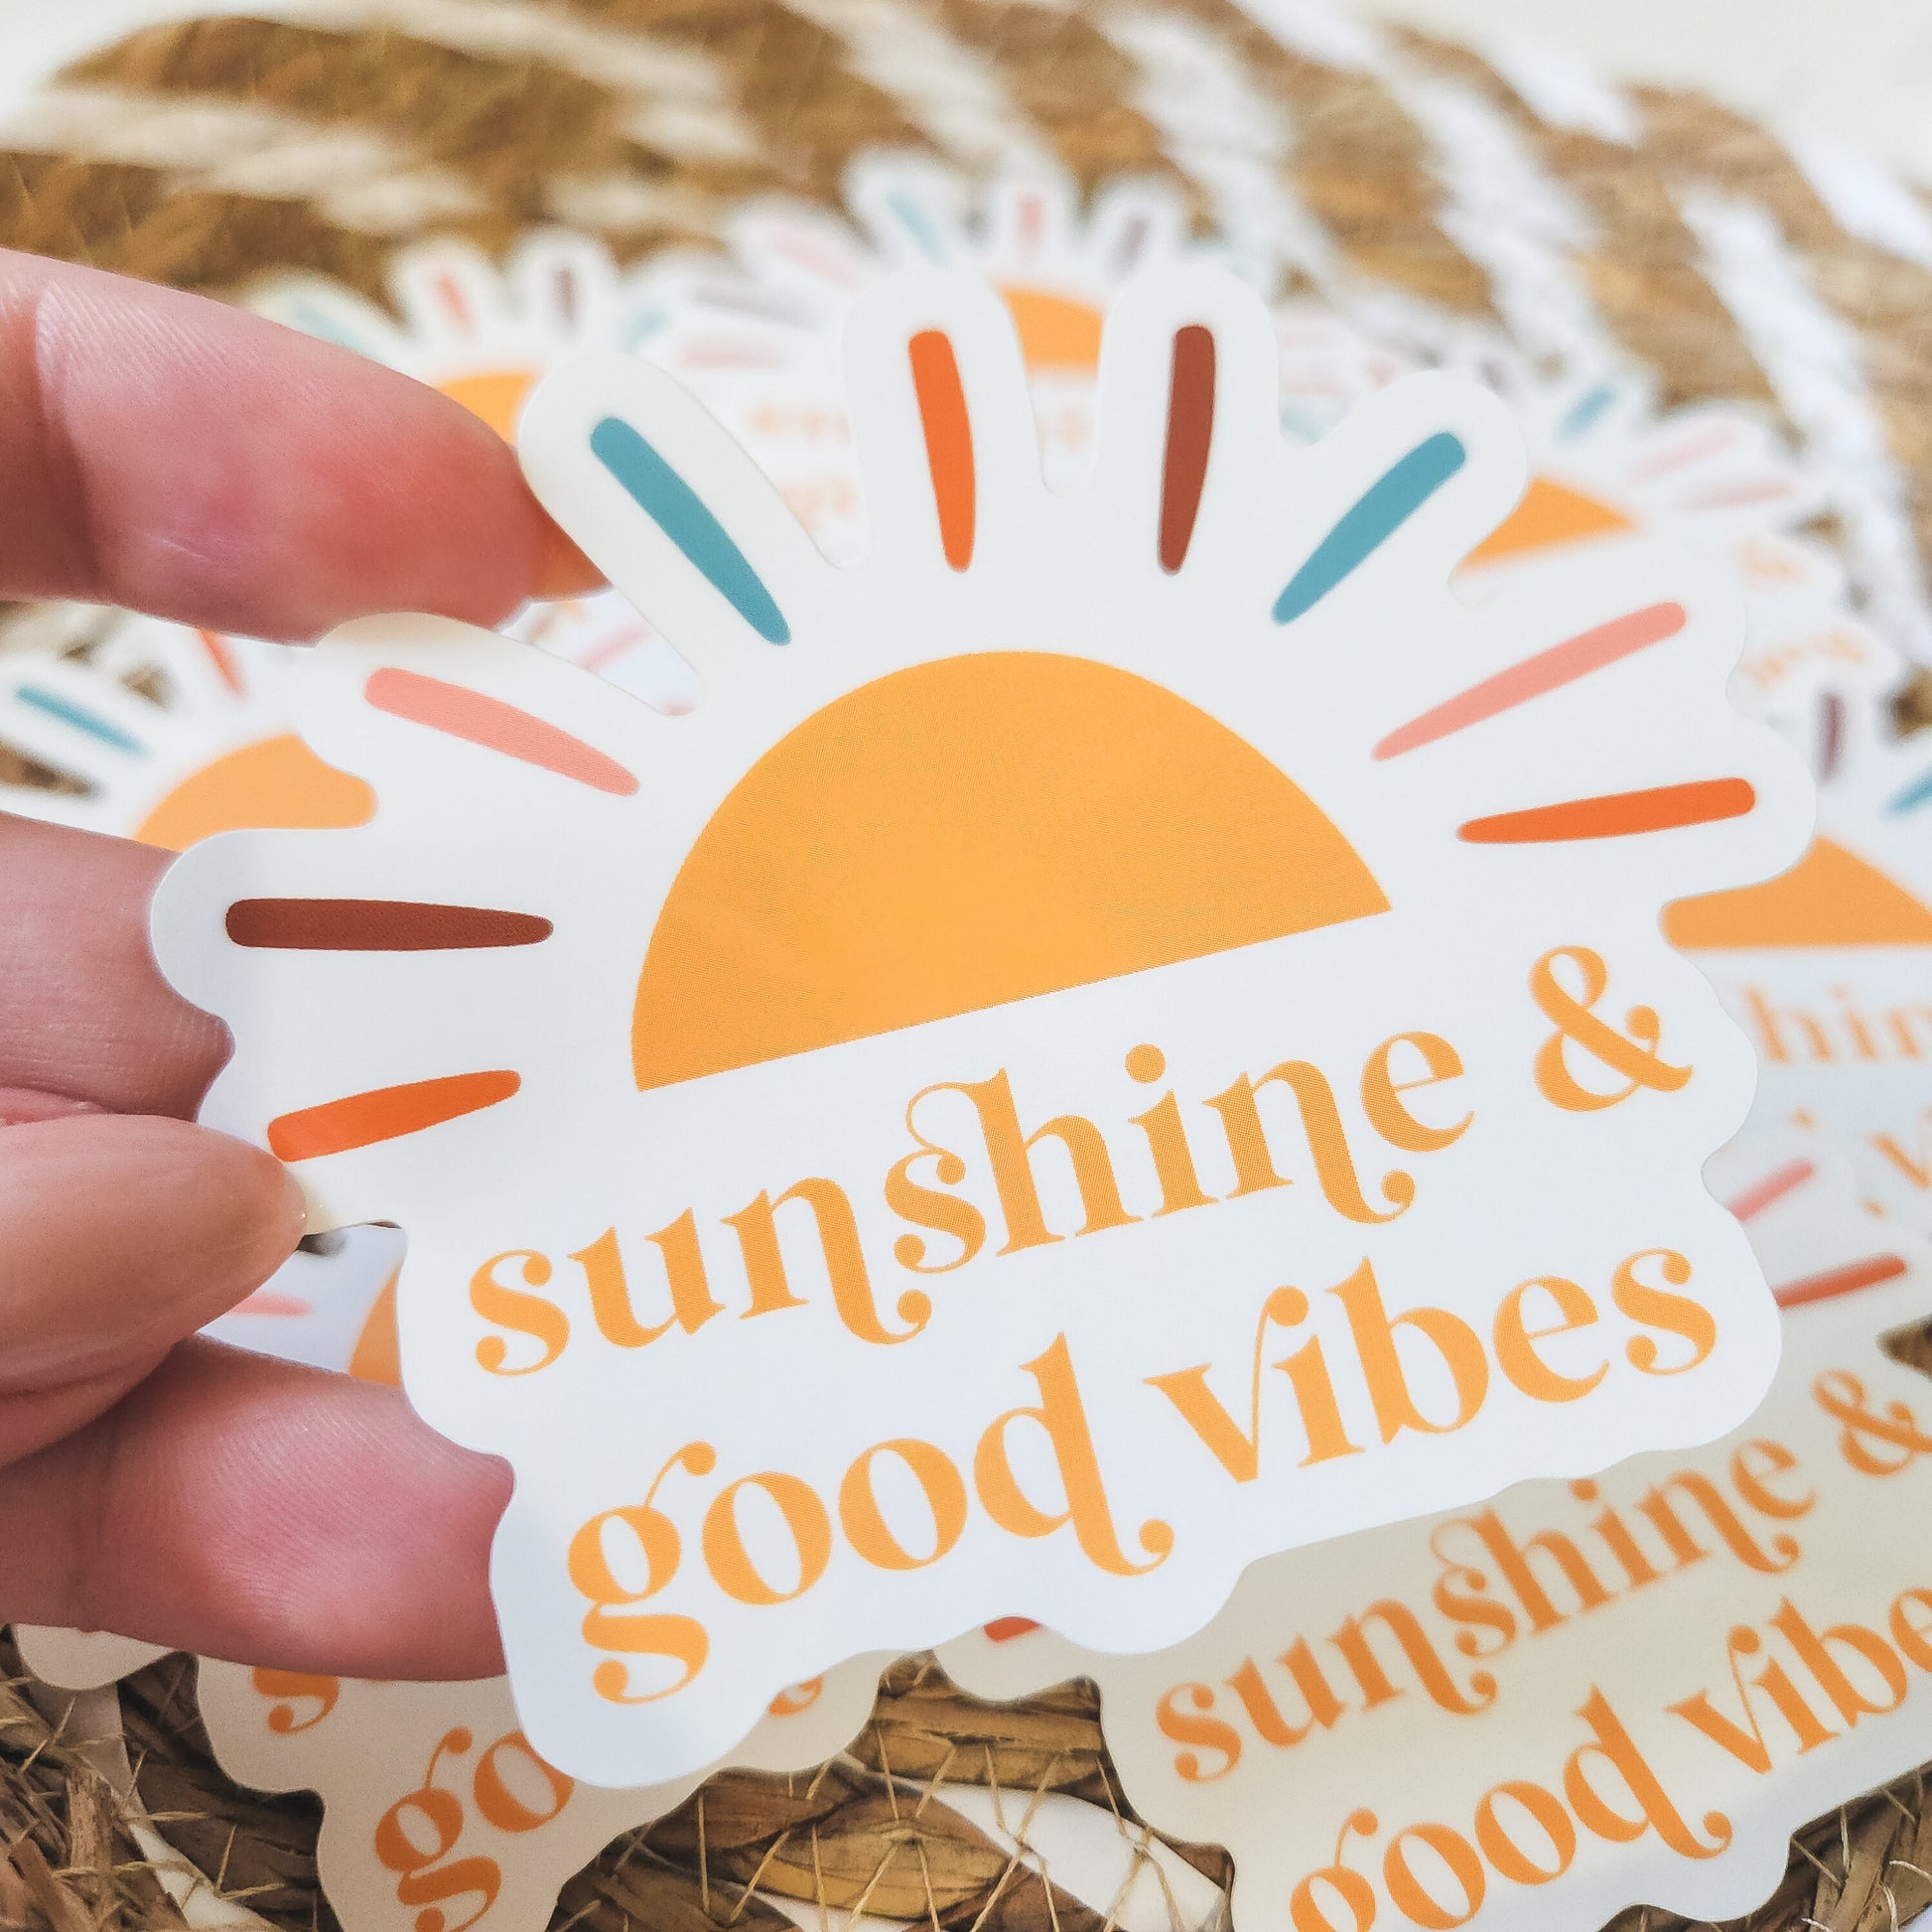 Happy healing vibes Sticker for Sale by OrangeSunStudio